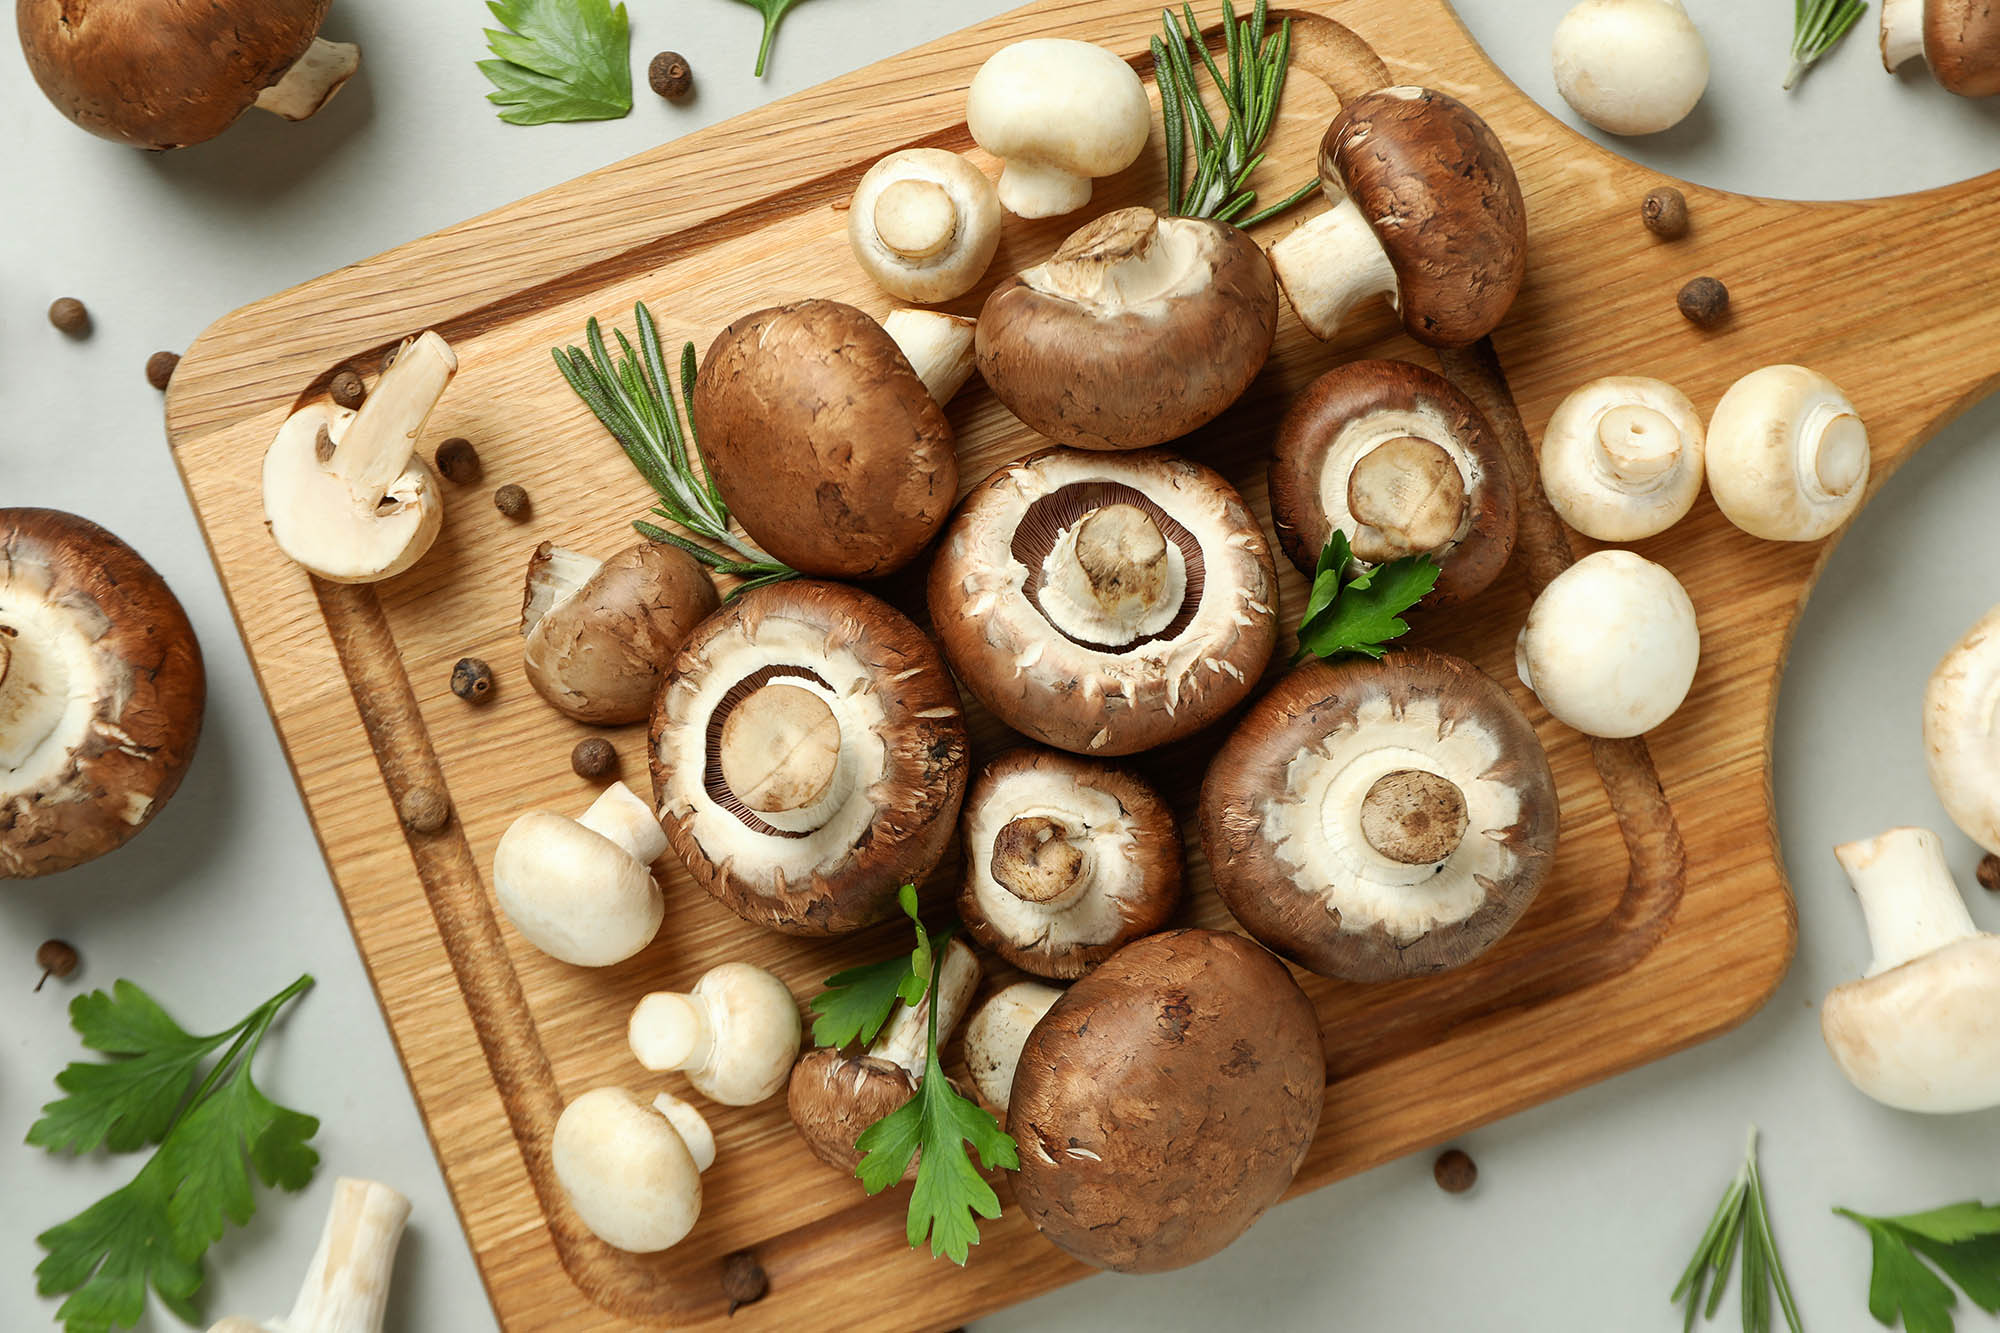 Teaching Kitchen: Mushroom Mania at Des Moines Hero Image